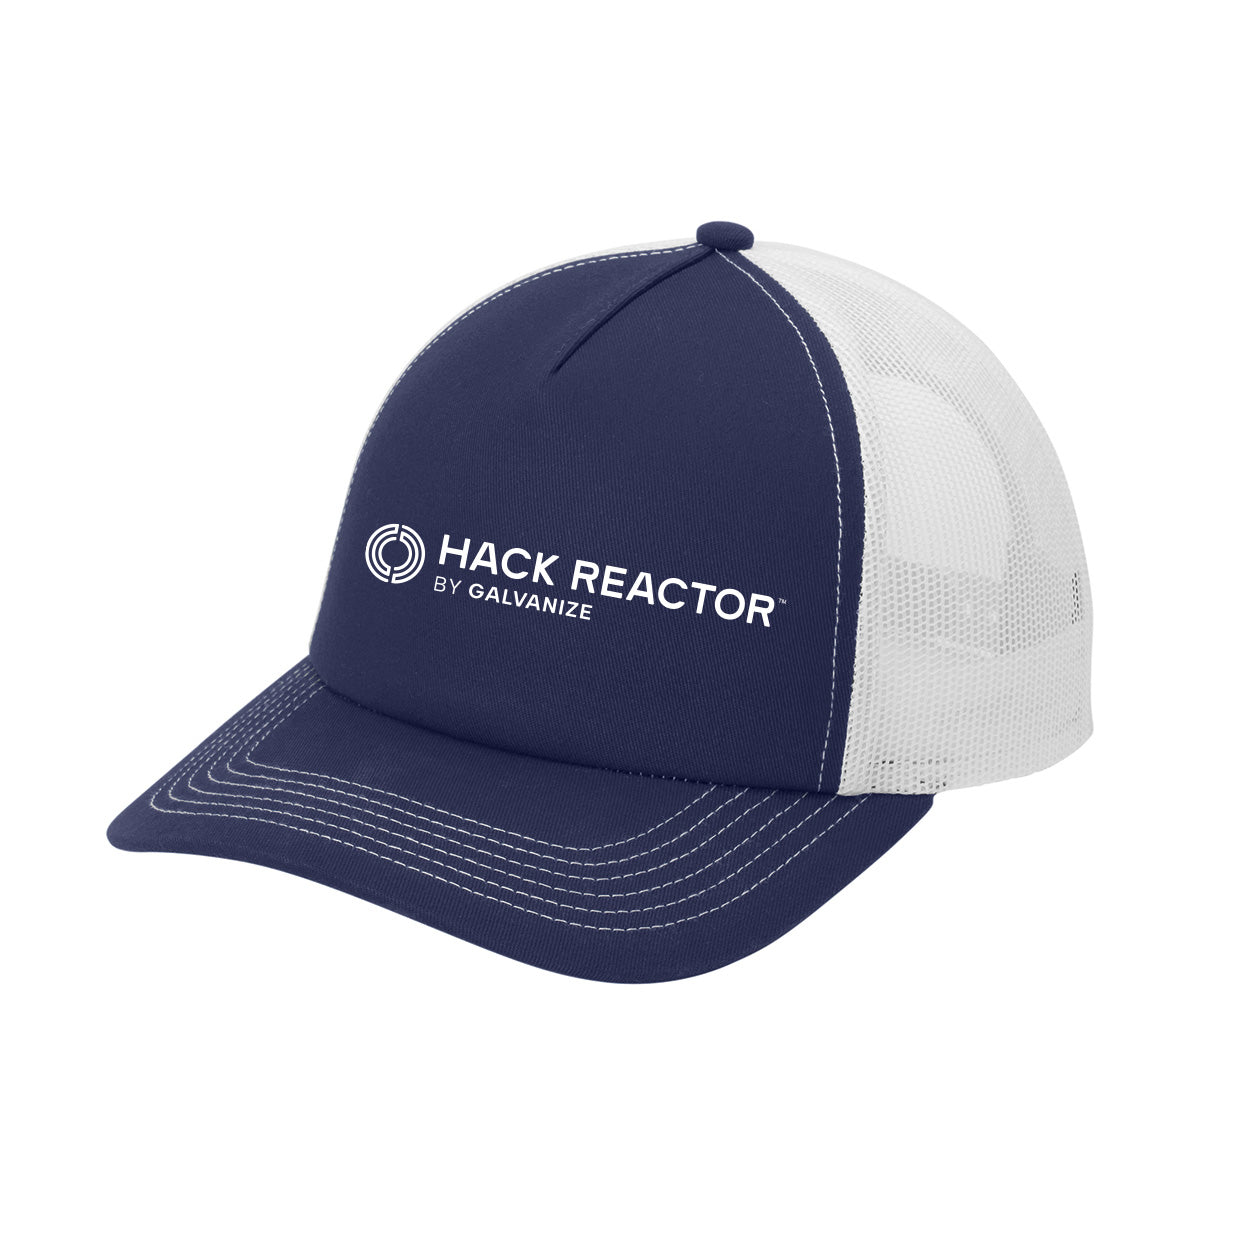 HACK REACTOR LOGO LOW-PROFILE SNAPBACK 5-PANEL TRUCKER CAP